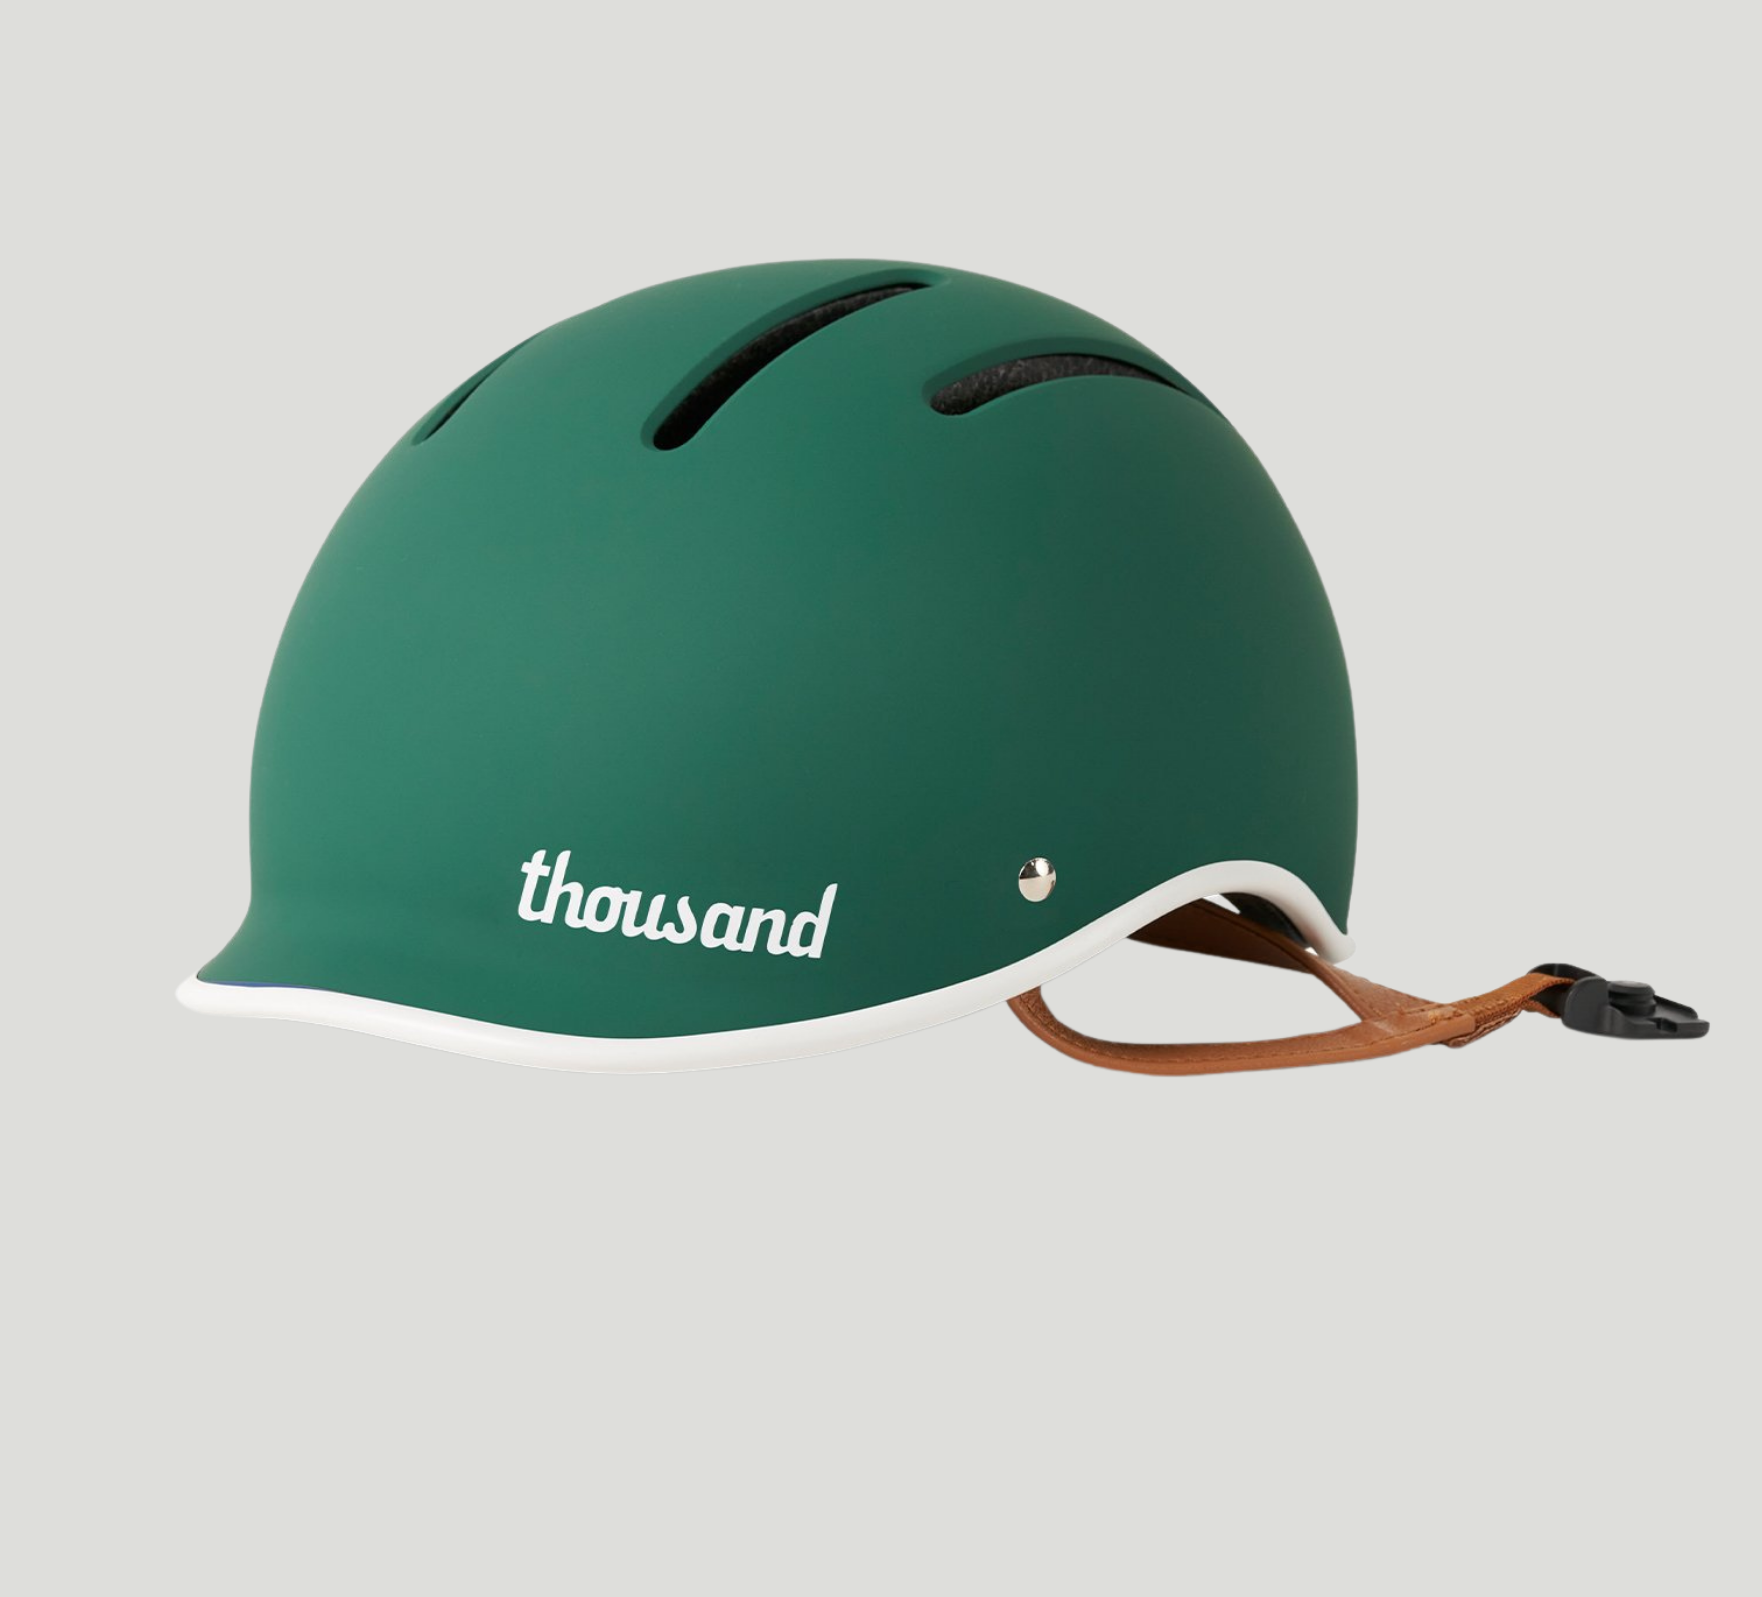 Thousand Junior Helmet